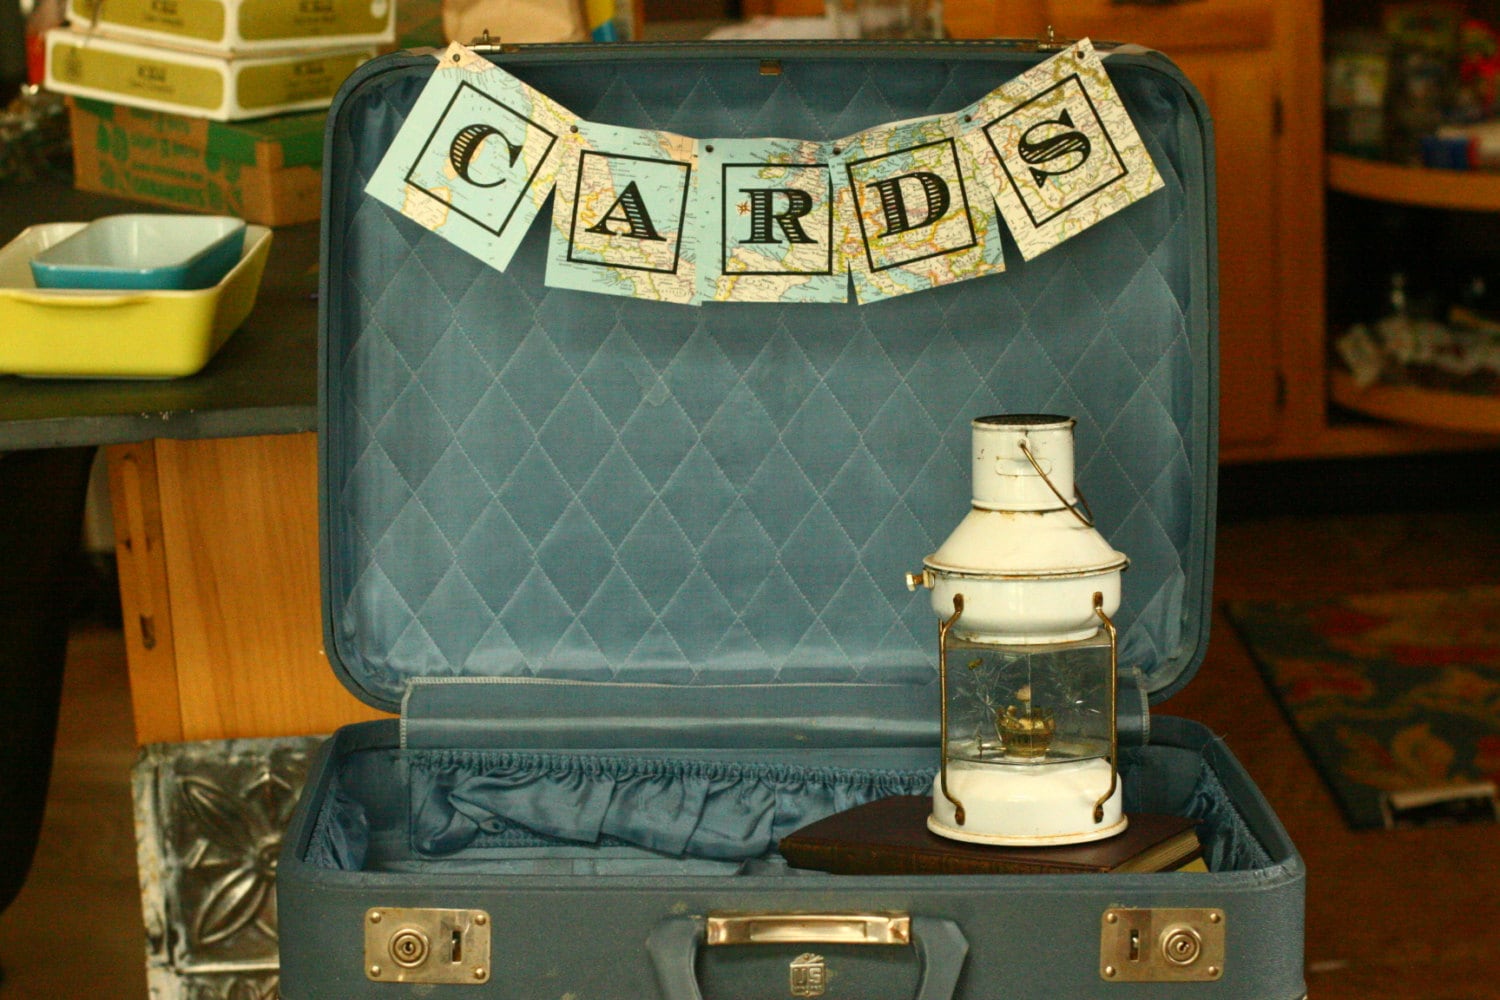 Supreme Black Box Logo Card Holder Travel Trip ID Case Luggage Tags Gift￼